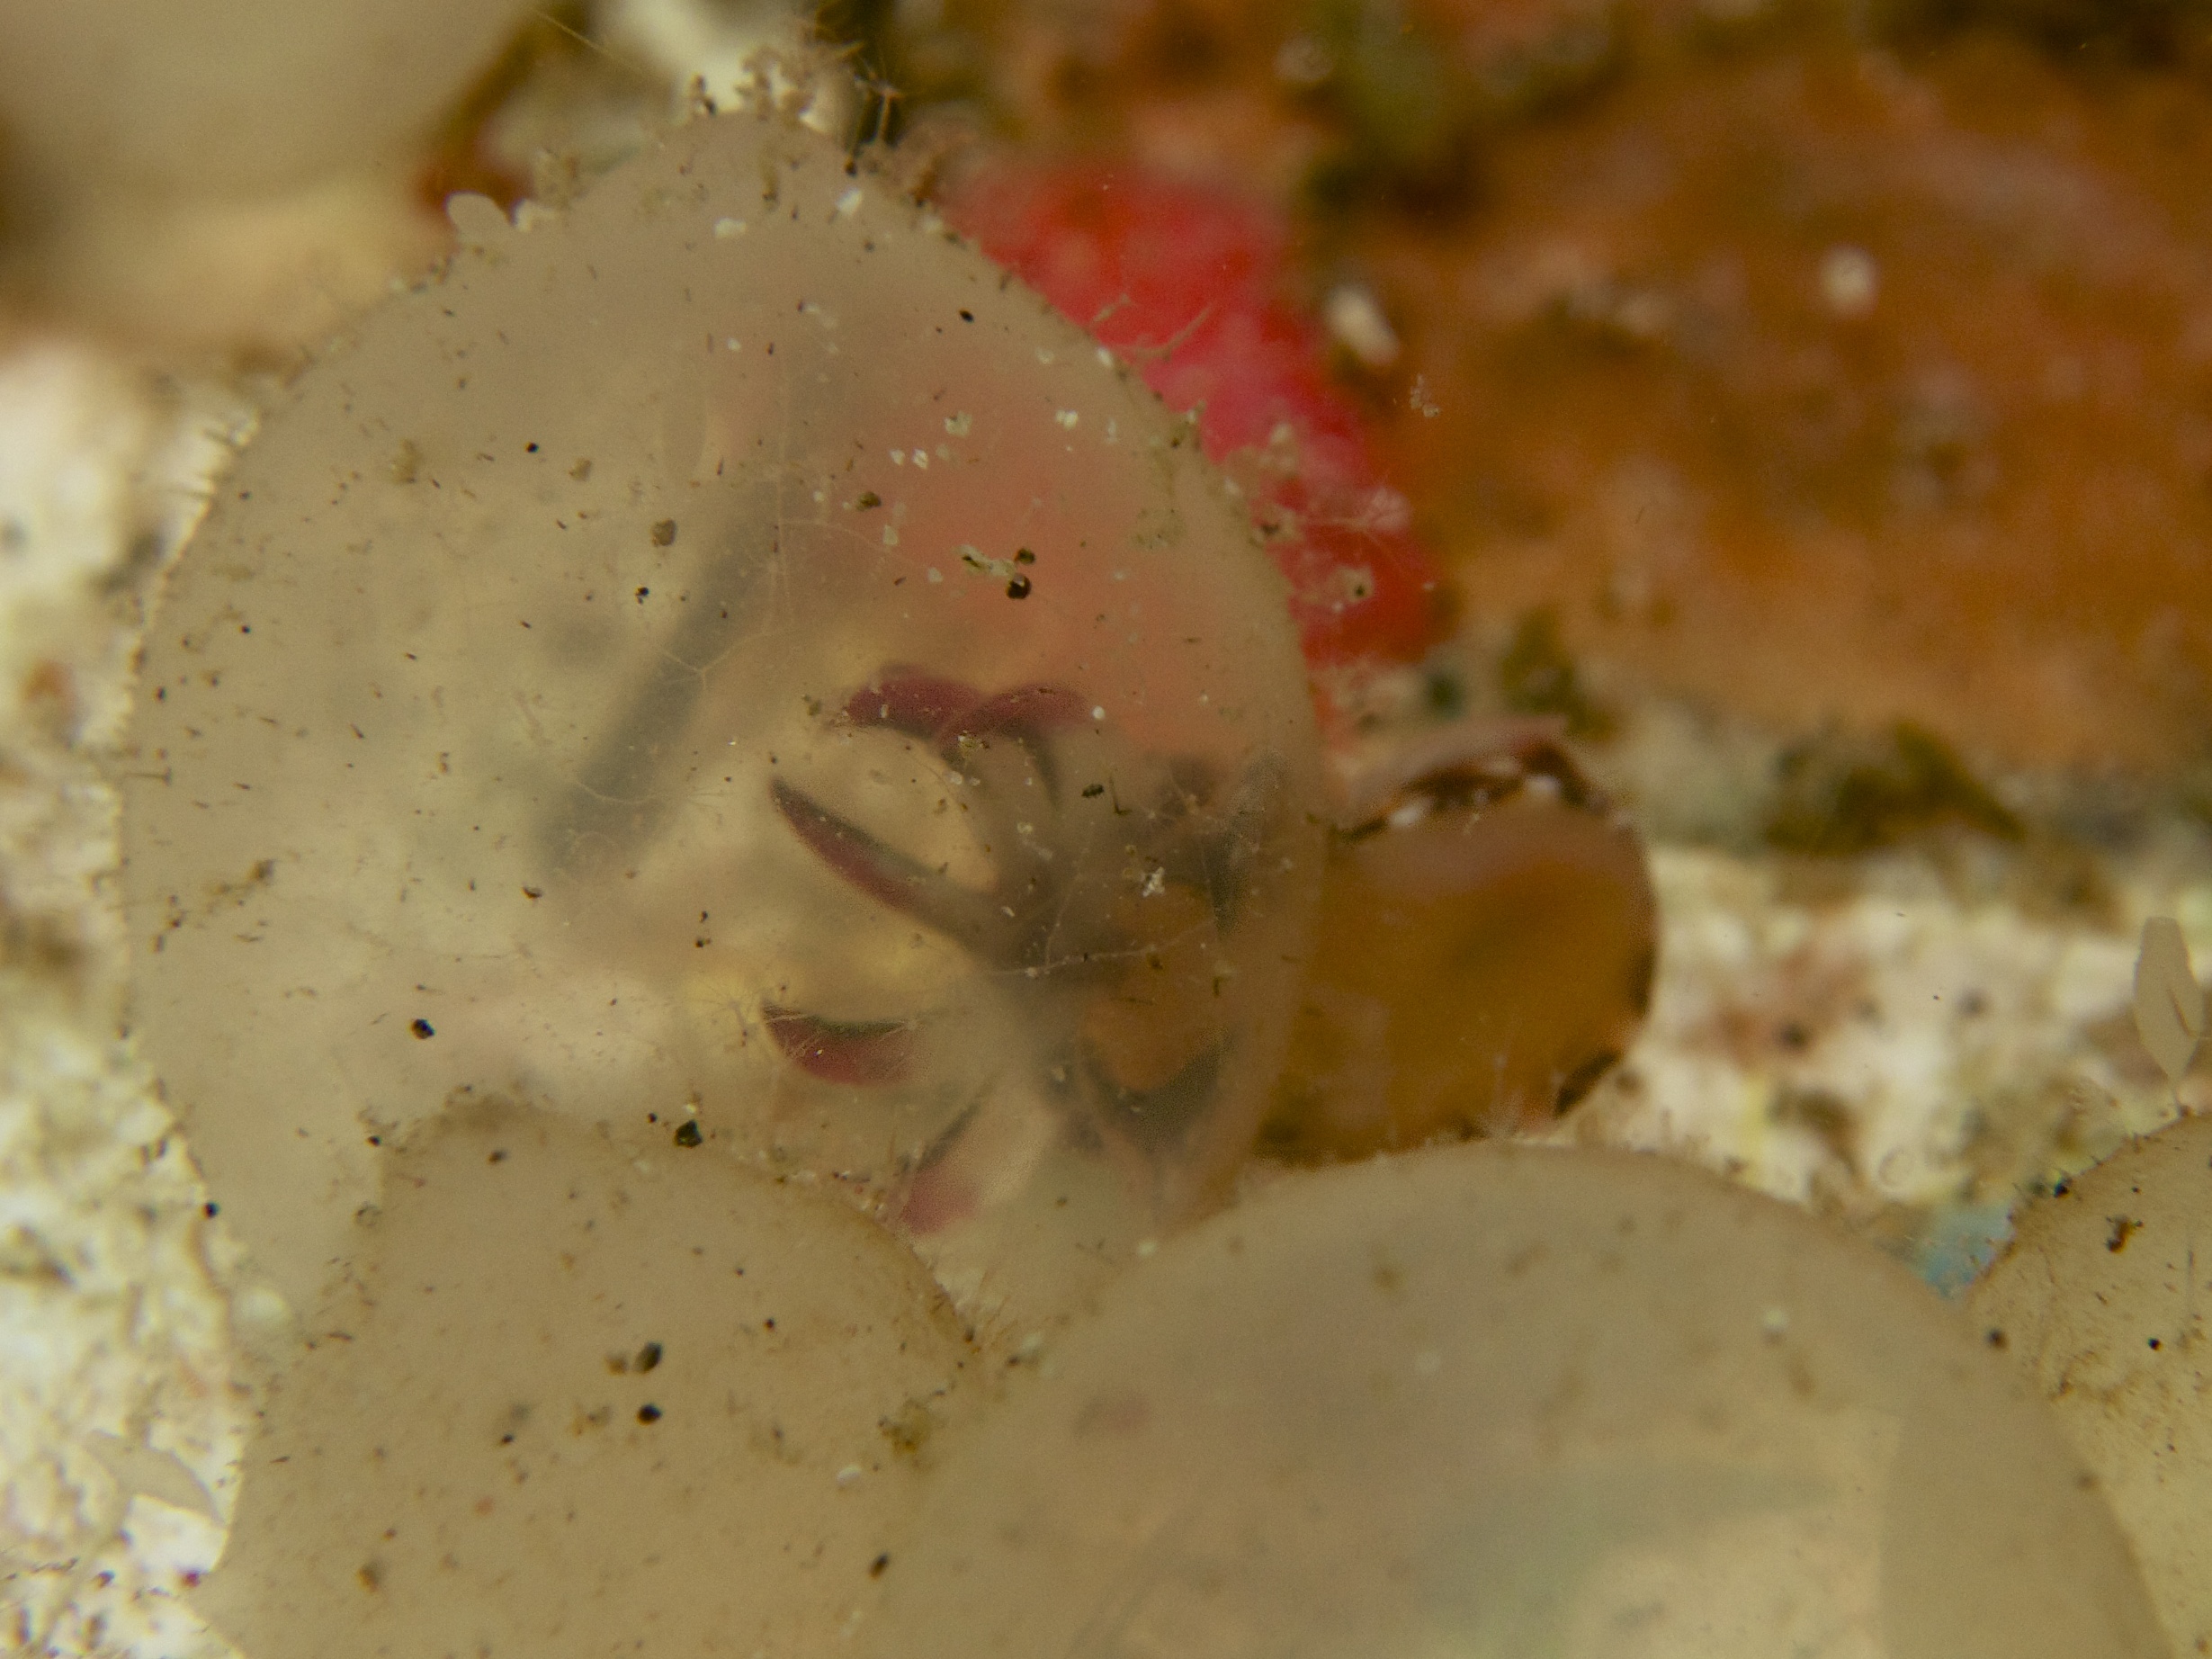 flamboyant cuttlefish hatching